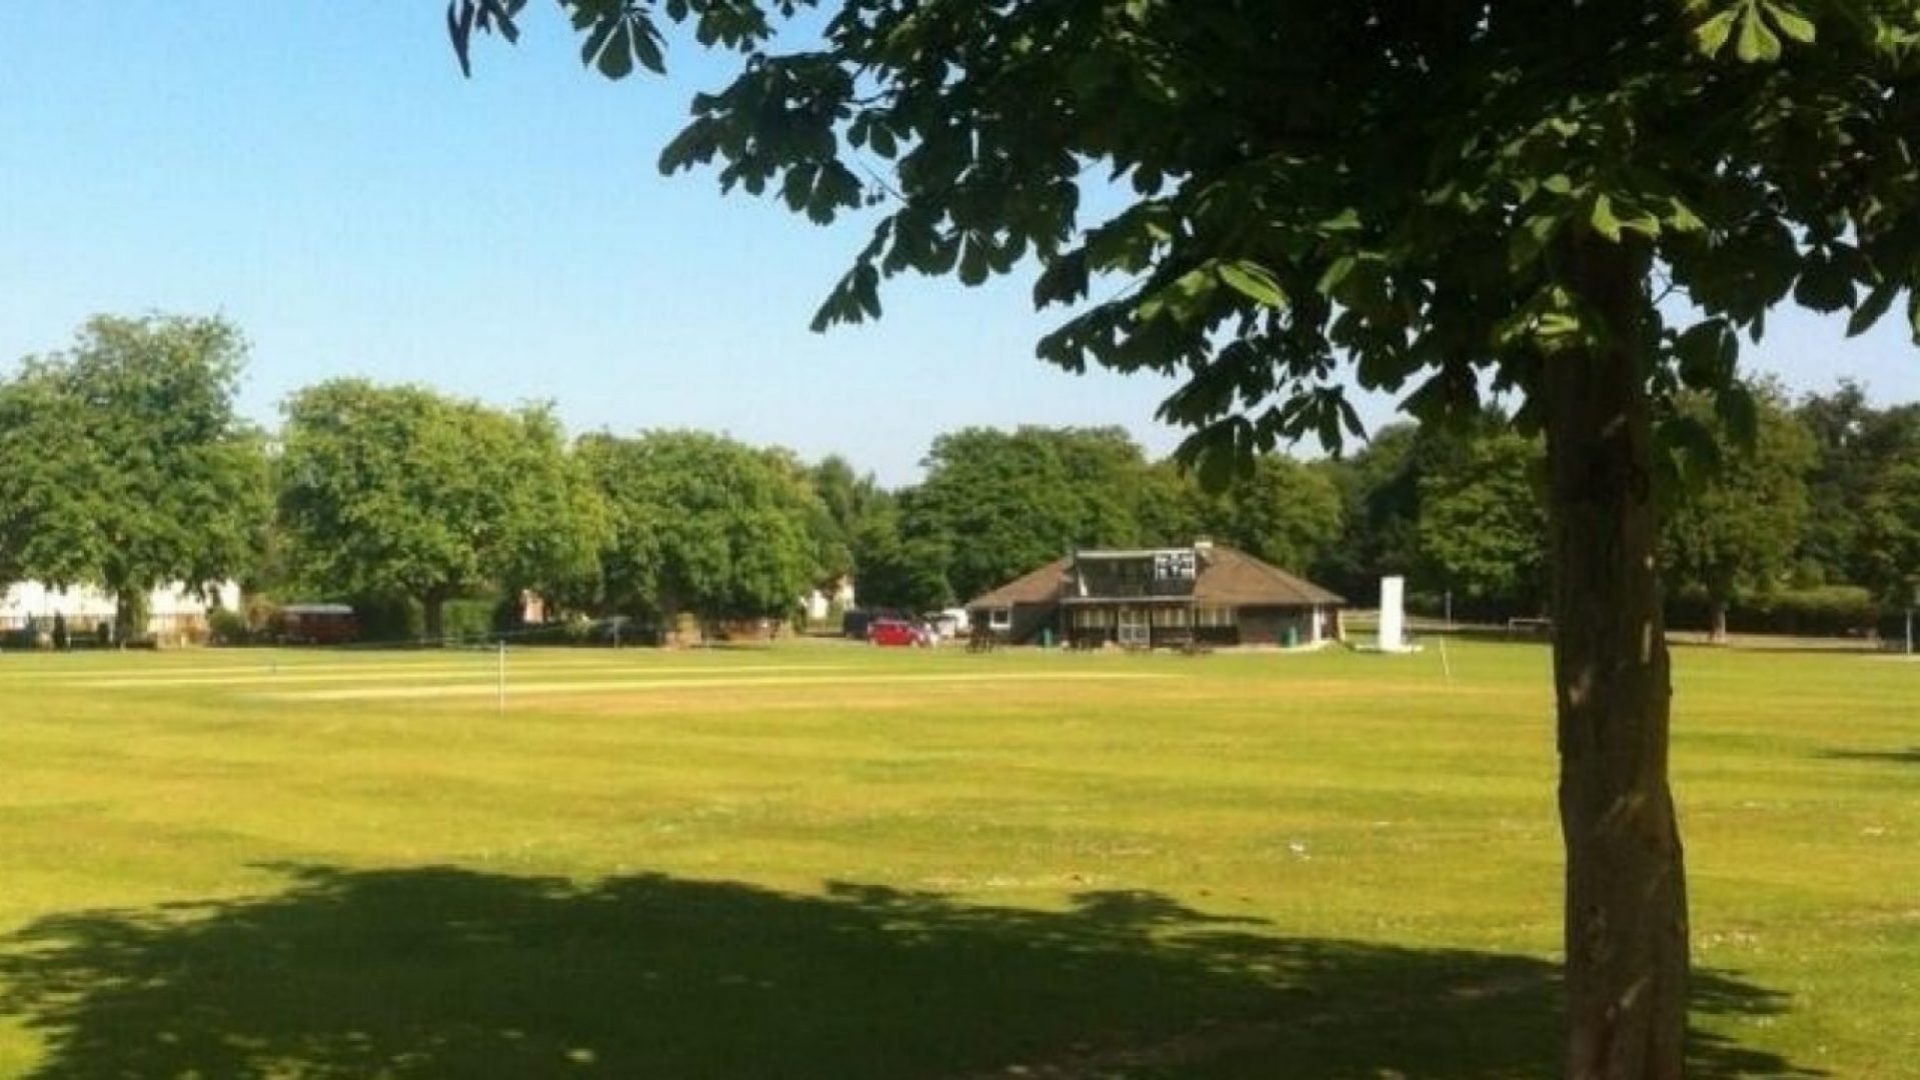 Wisborough Green Cricket Club